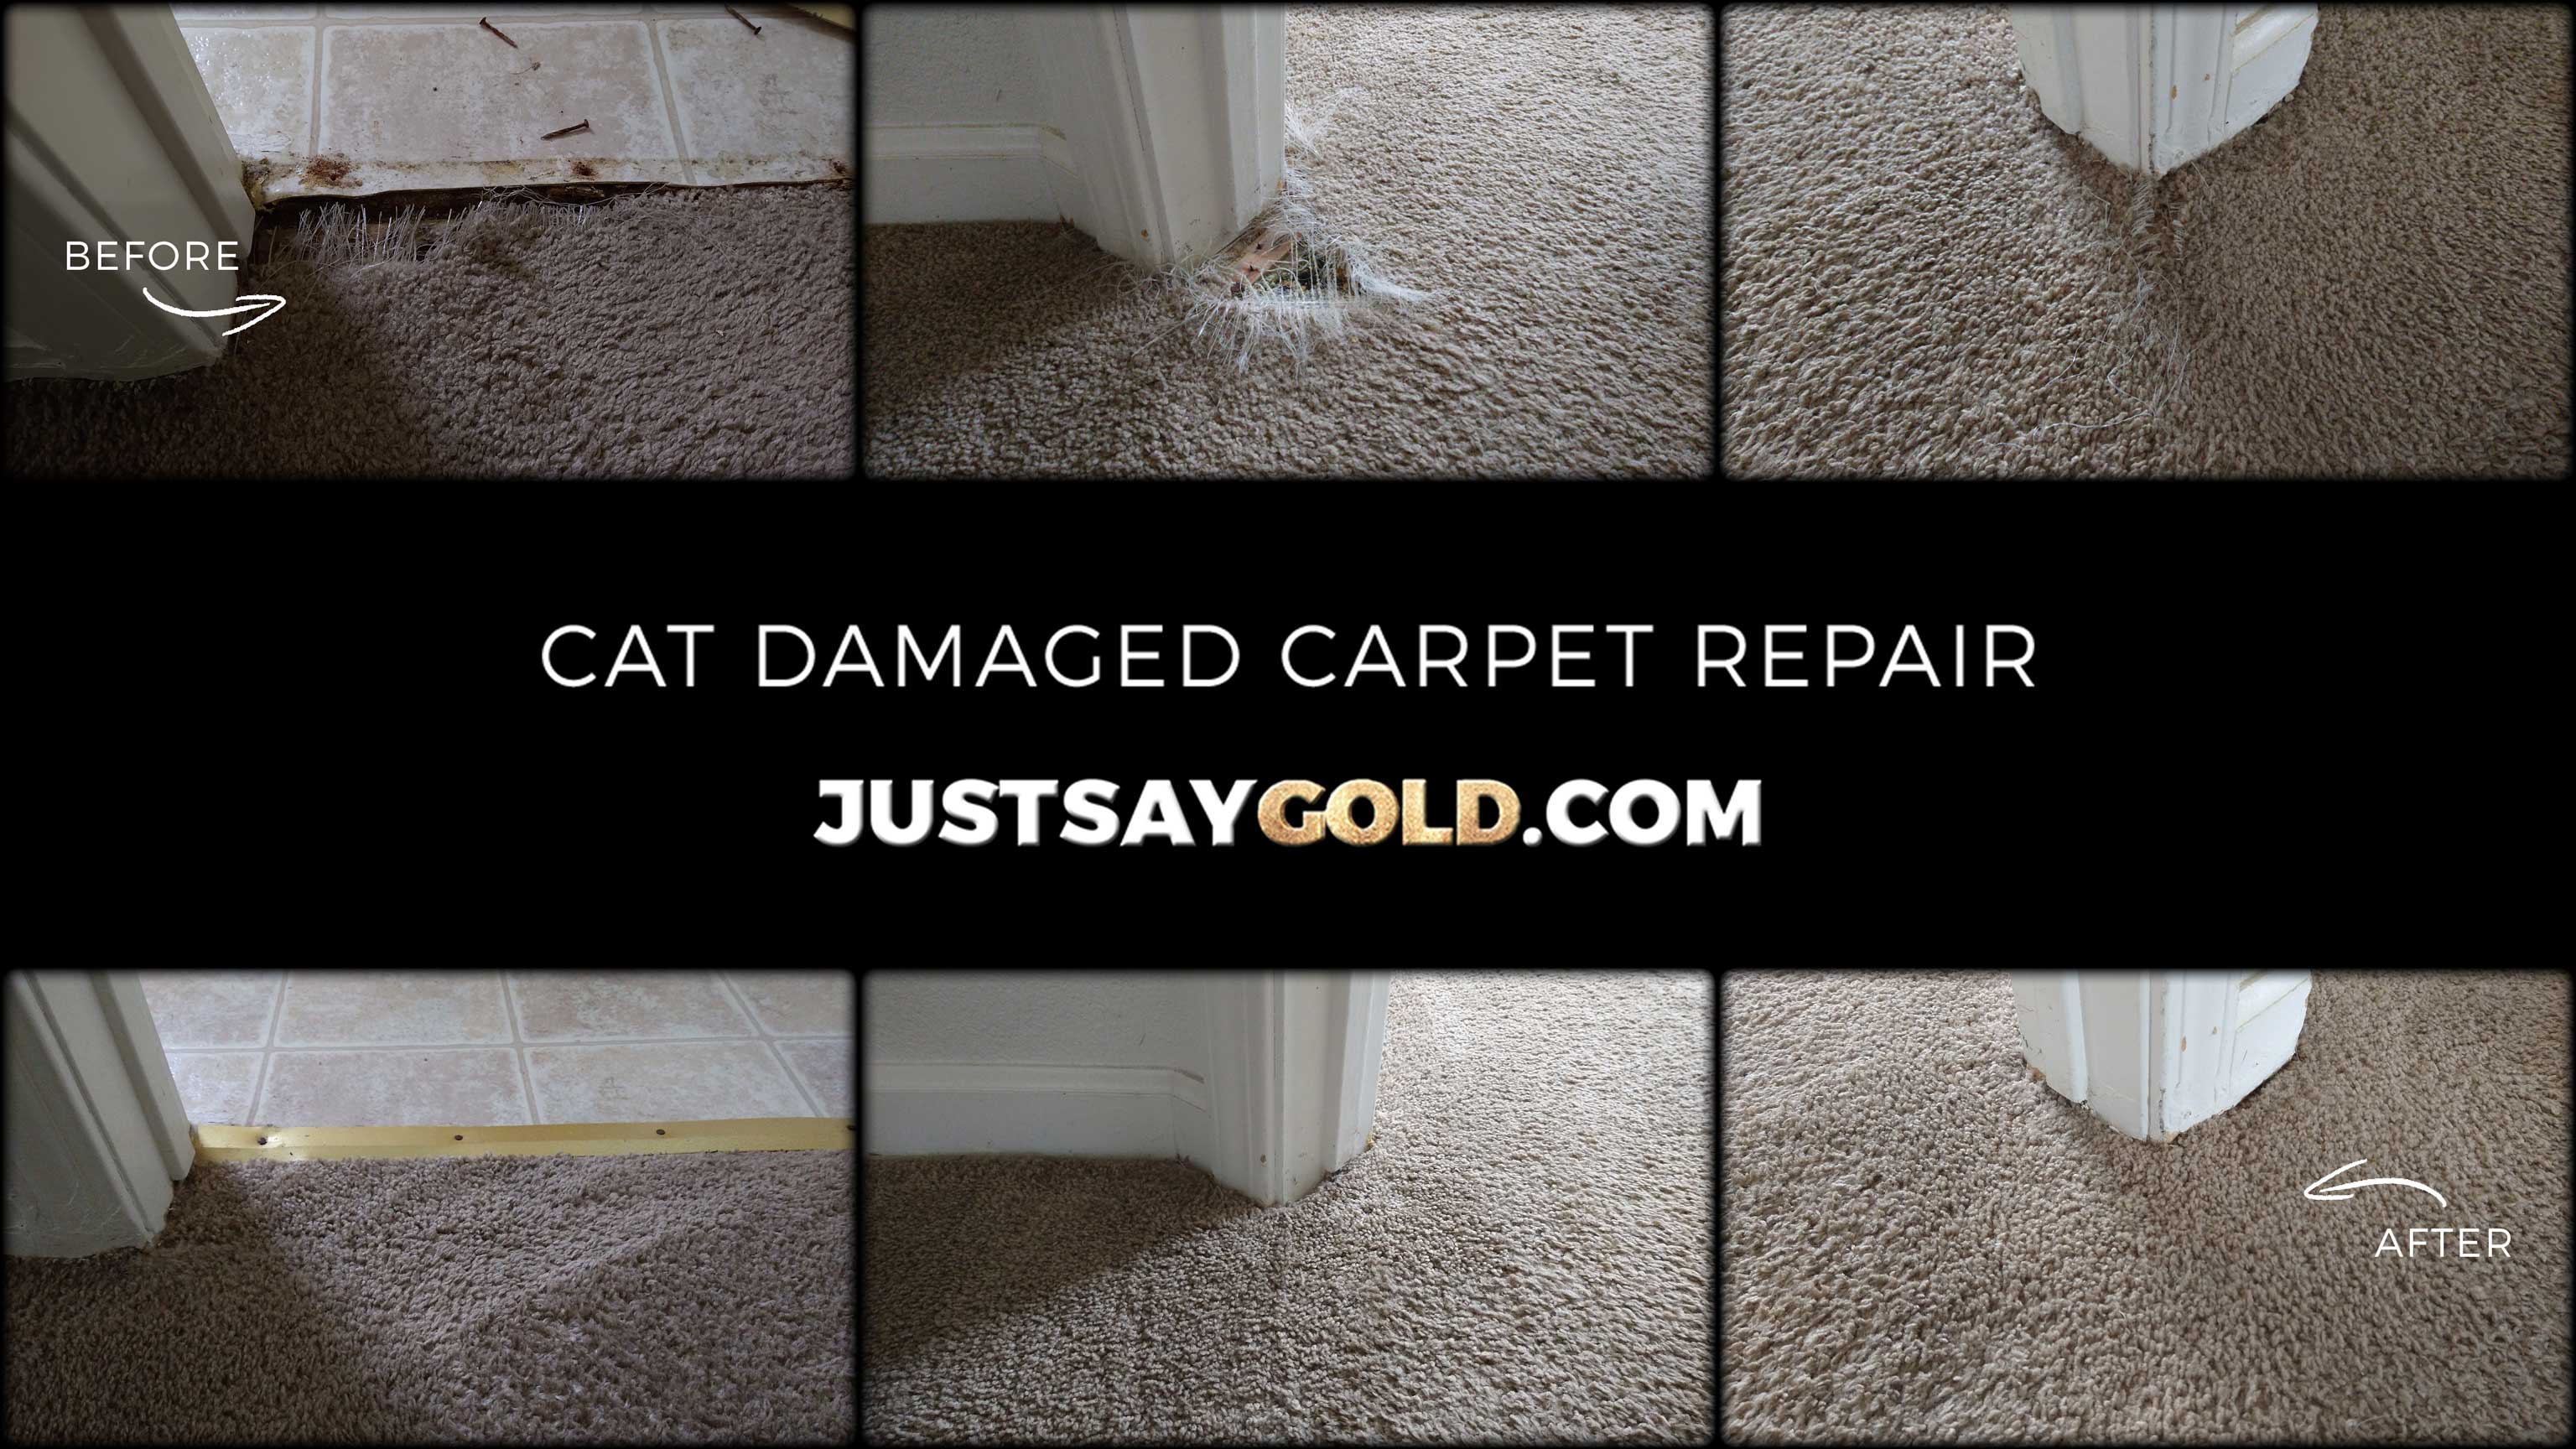 Carpet Repair & Re-Stretching Sacramento CA 5 Star Rated